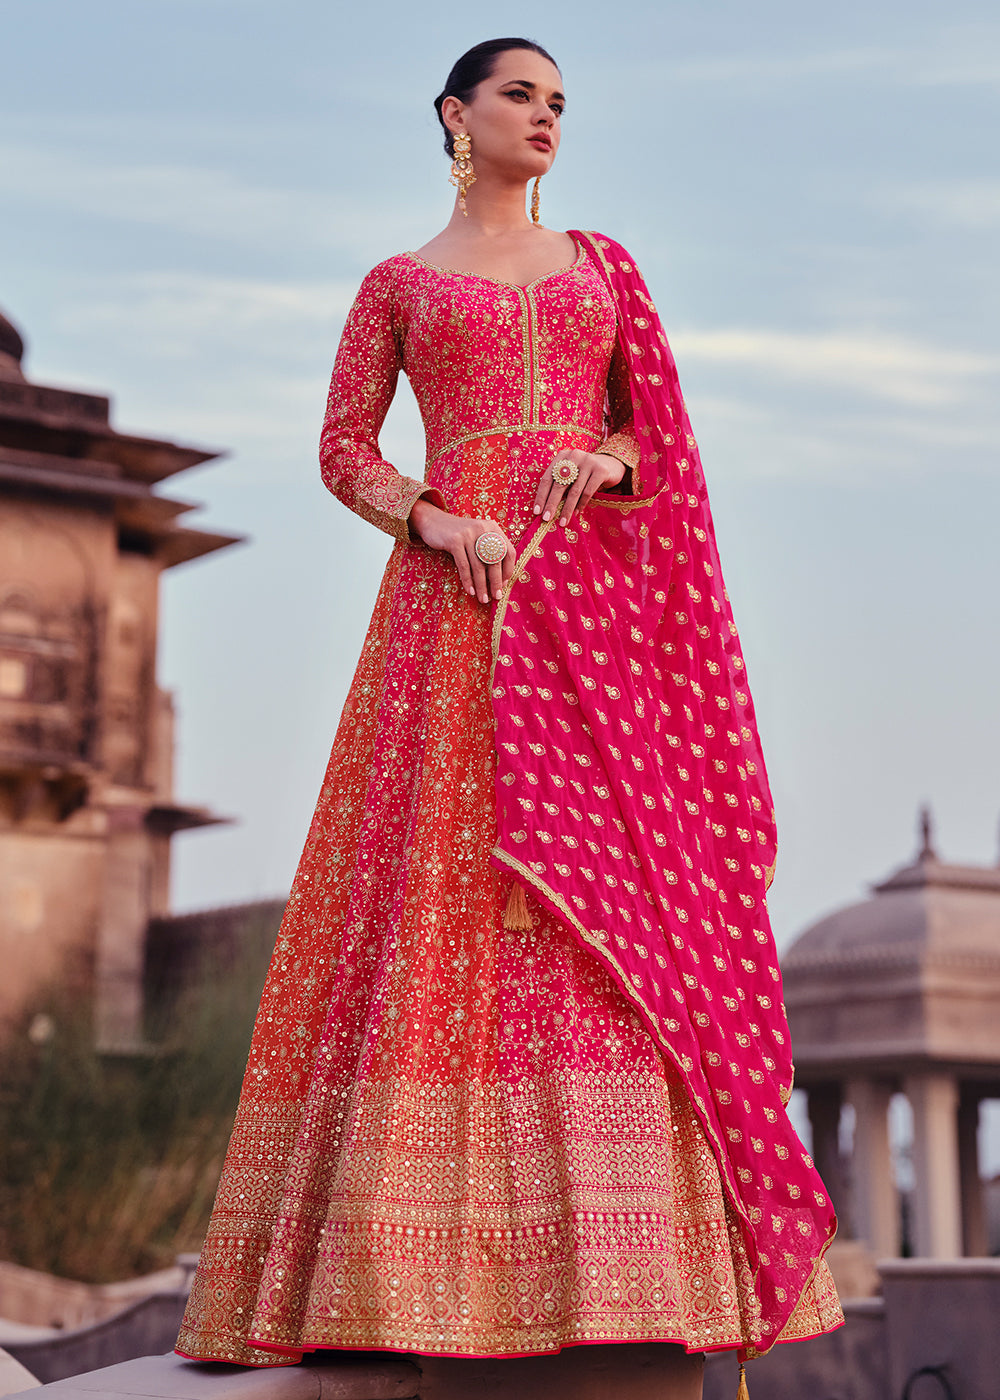 Buy Now Pink & Orange Heavy Georgette Floor Length Anarkali Gown Online in USA, UK, Australia, Canada & Worldwide at Empress Clothing.